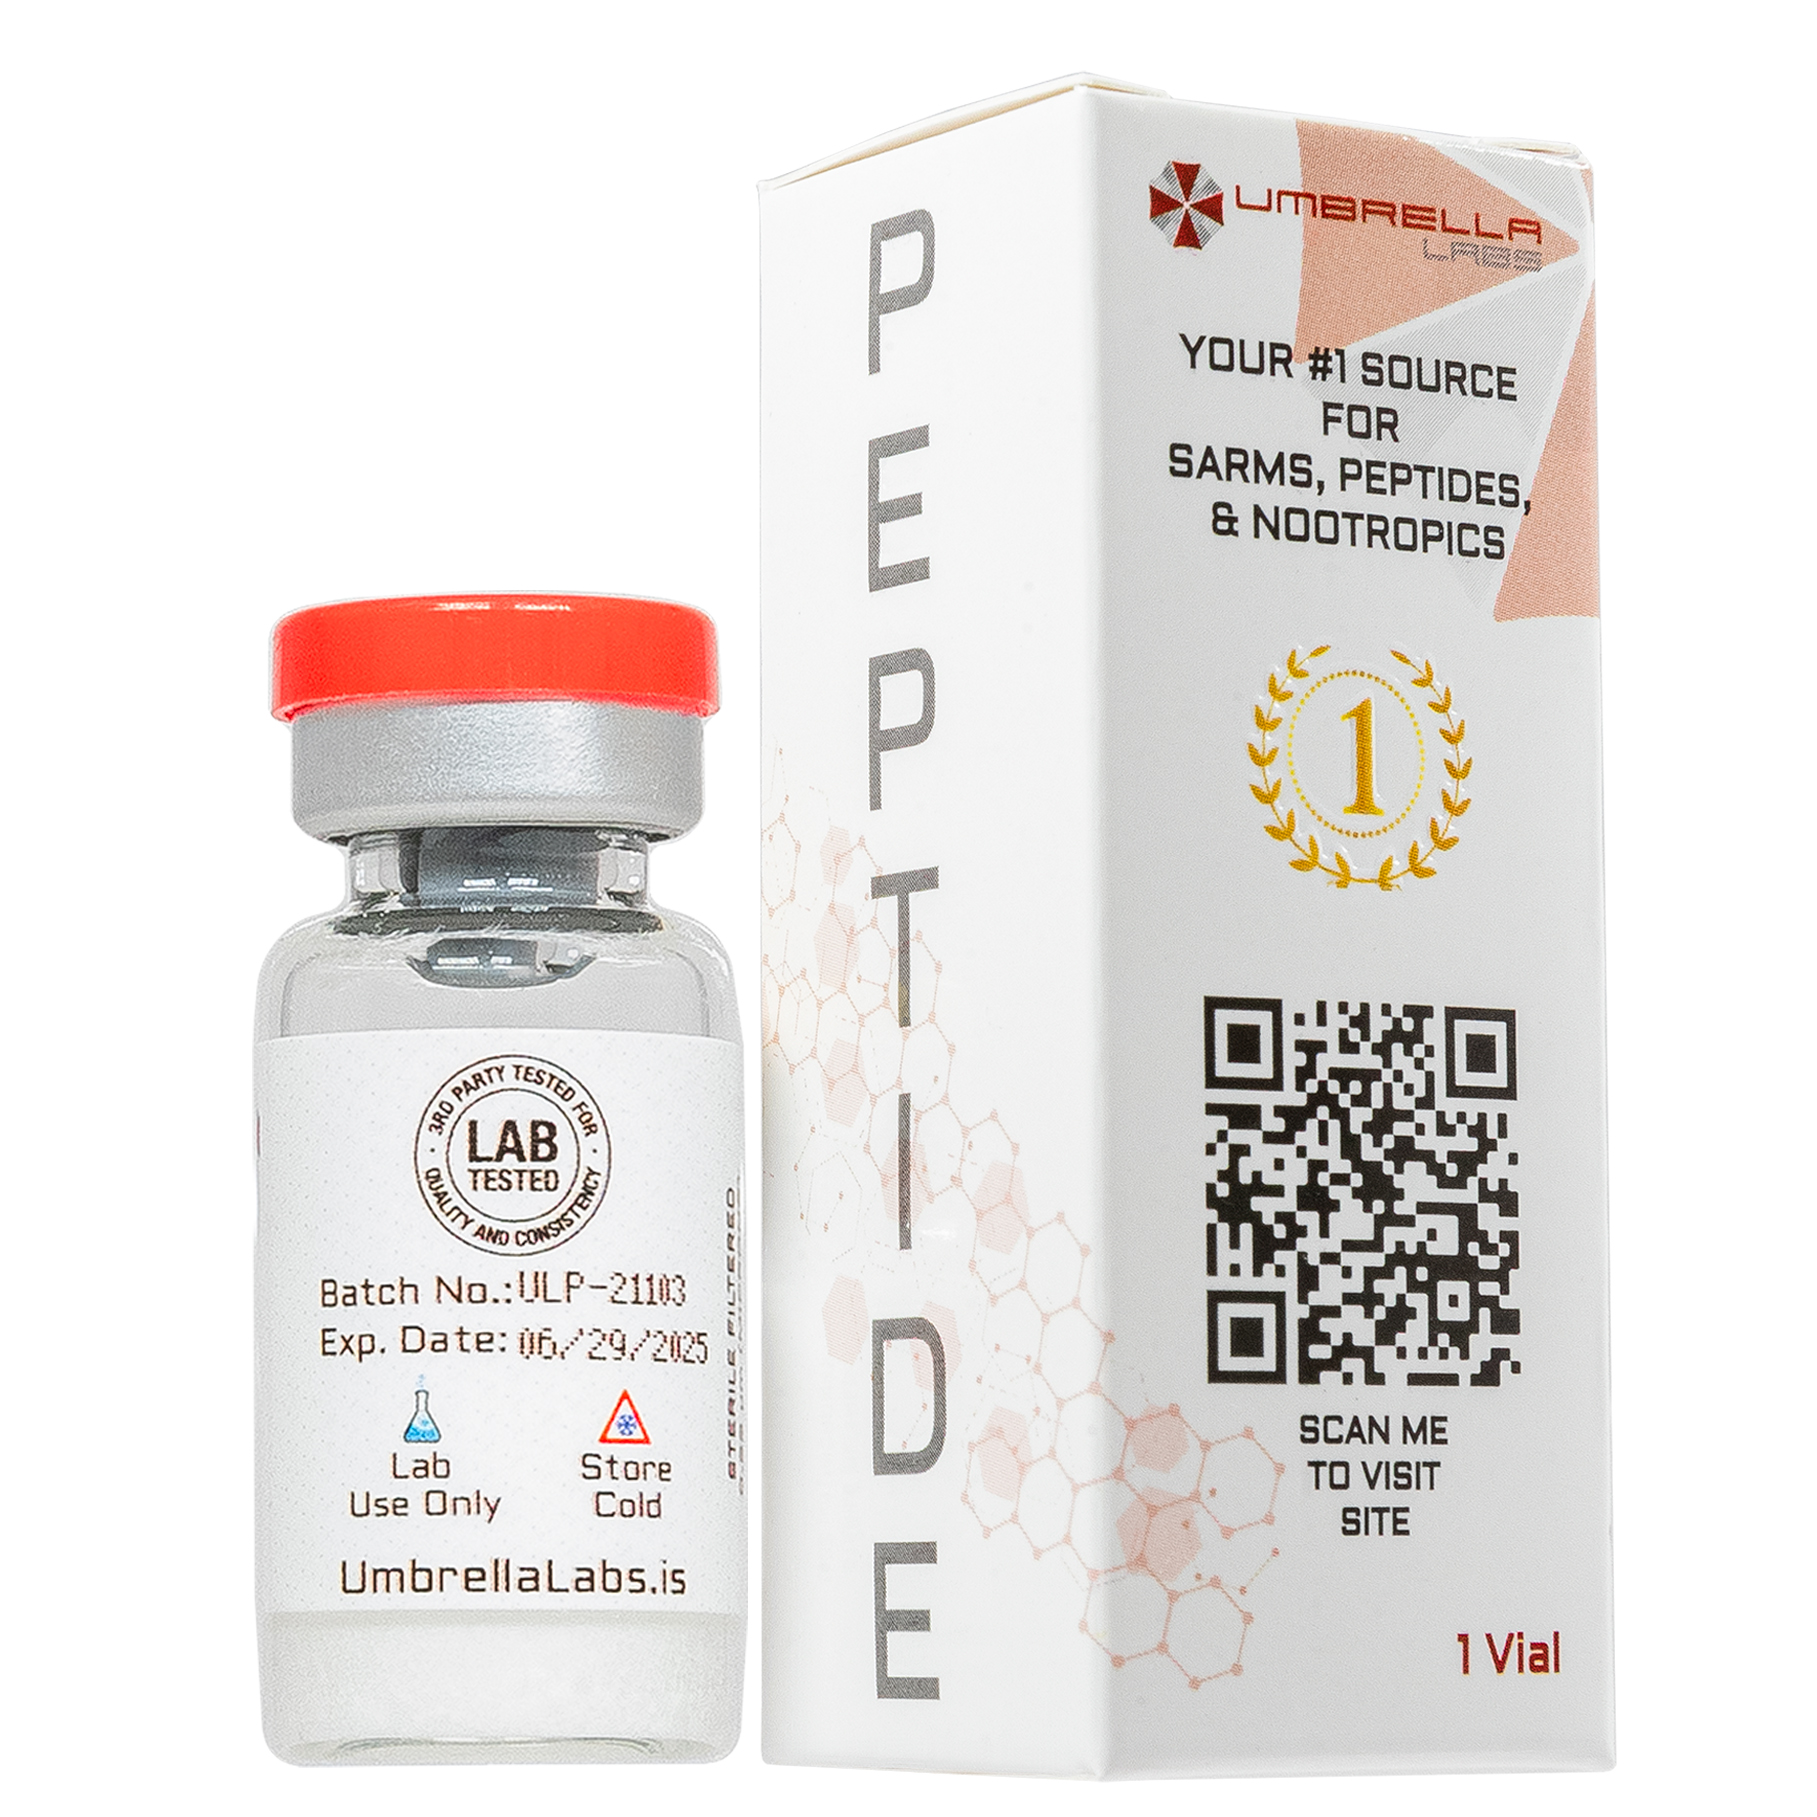 dsip peptide 2mg/5mg vial